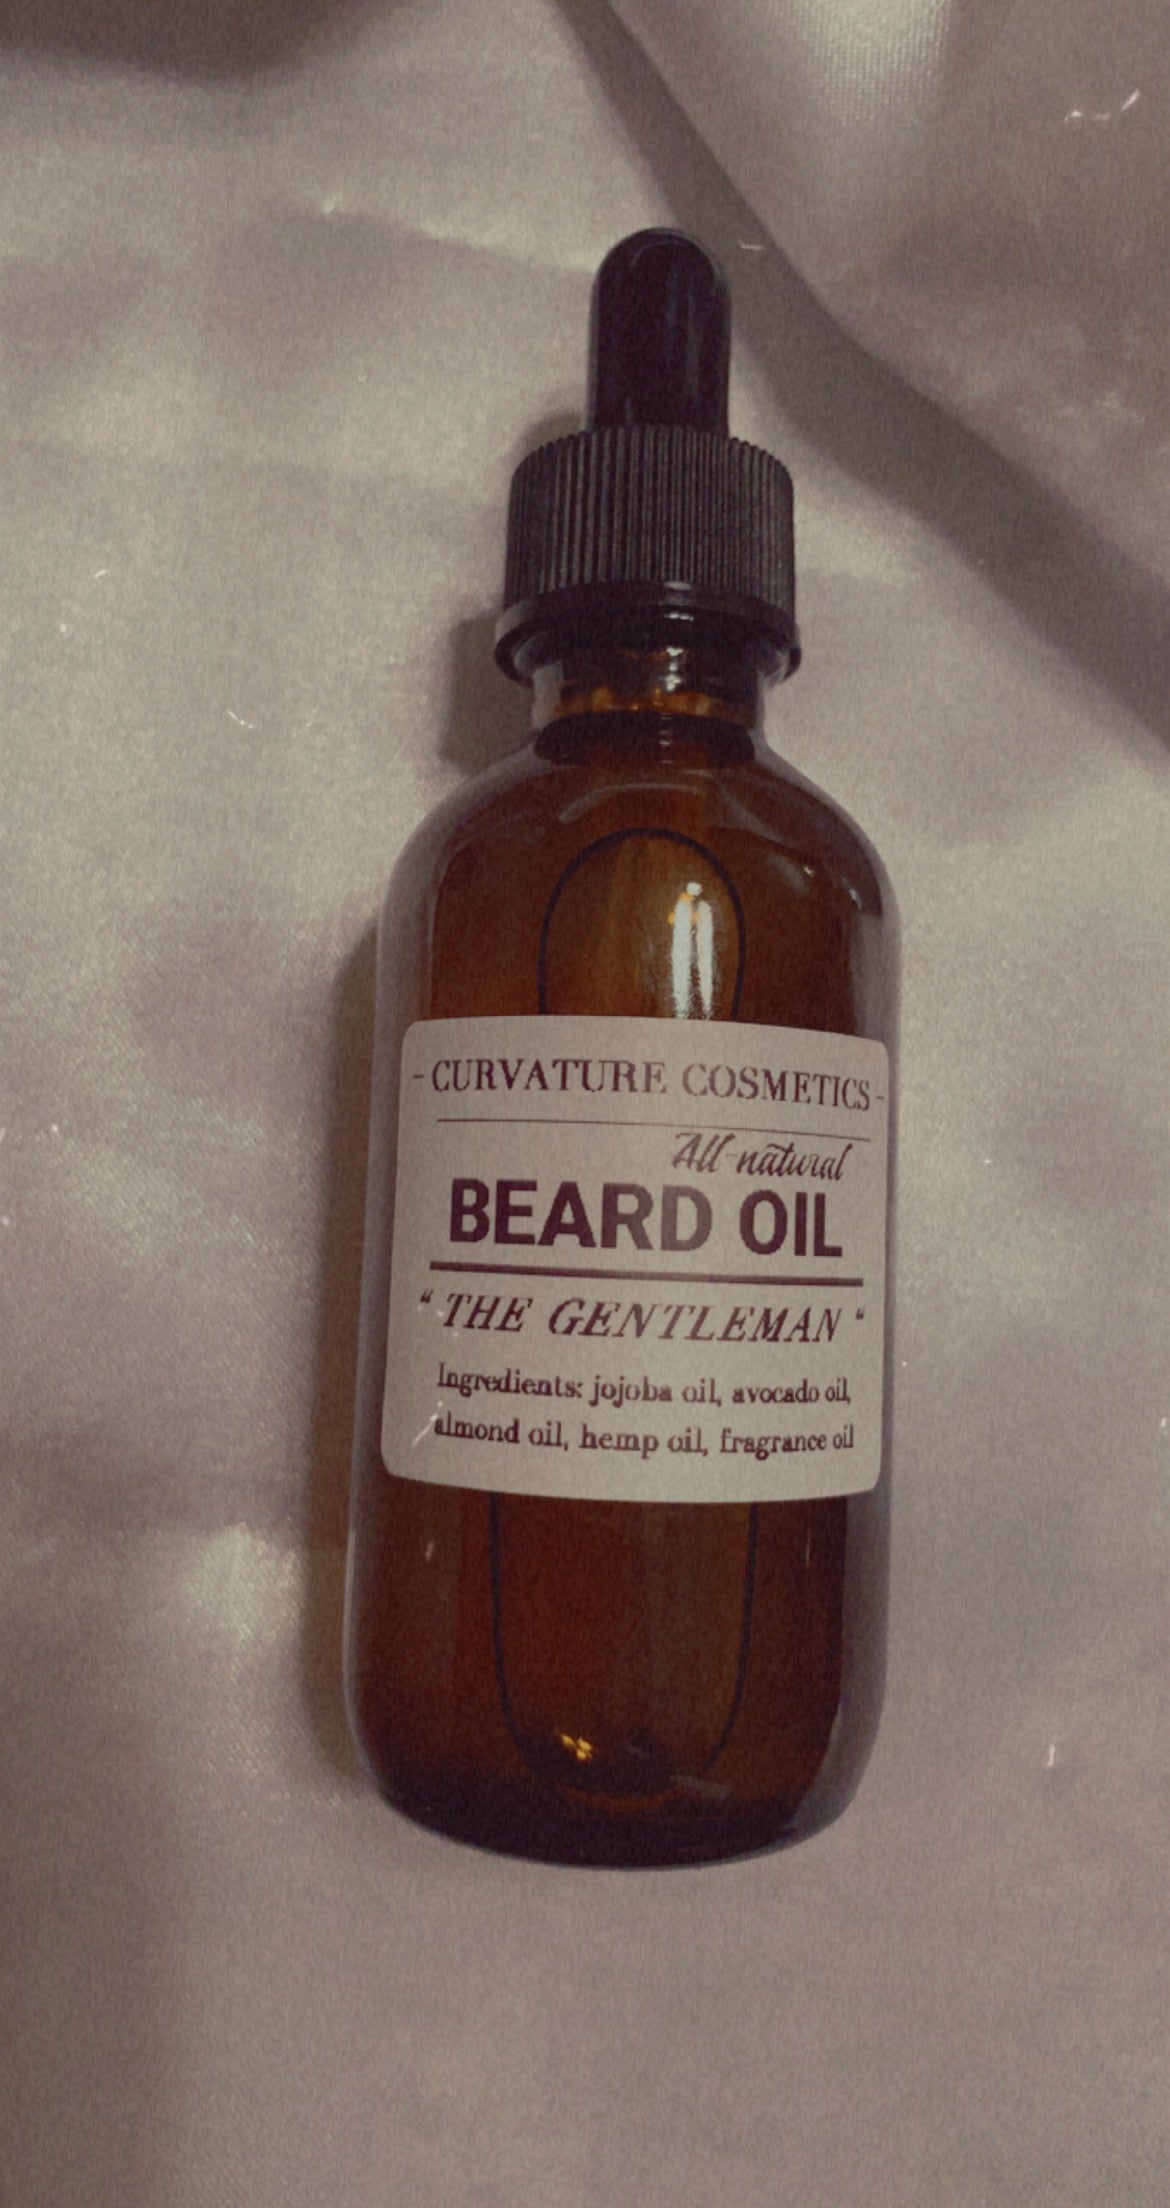 “The Gentleman” - beard oil